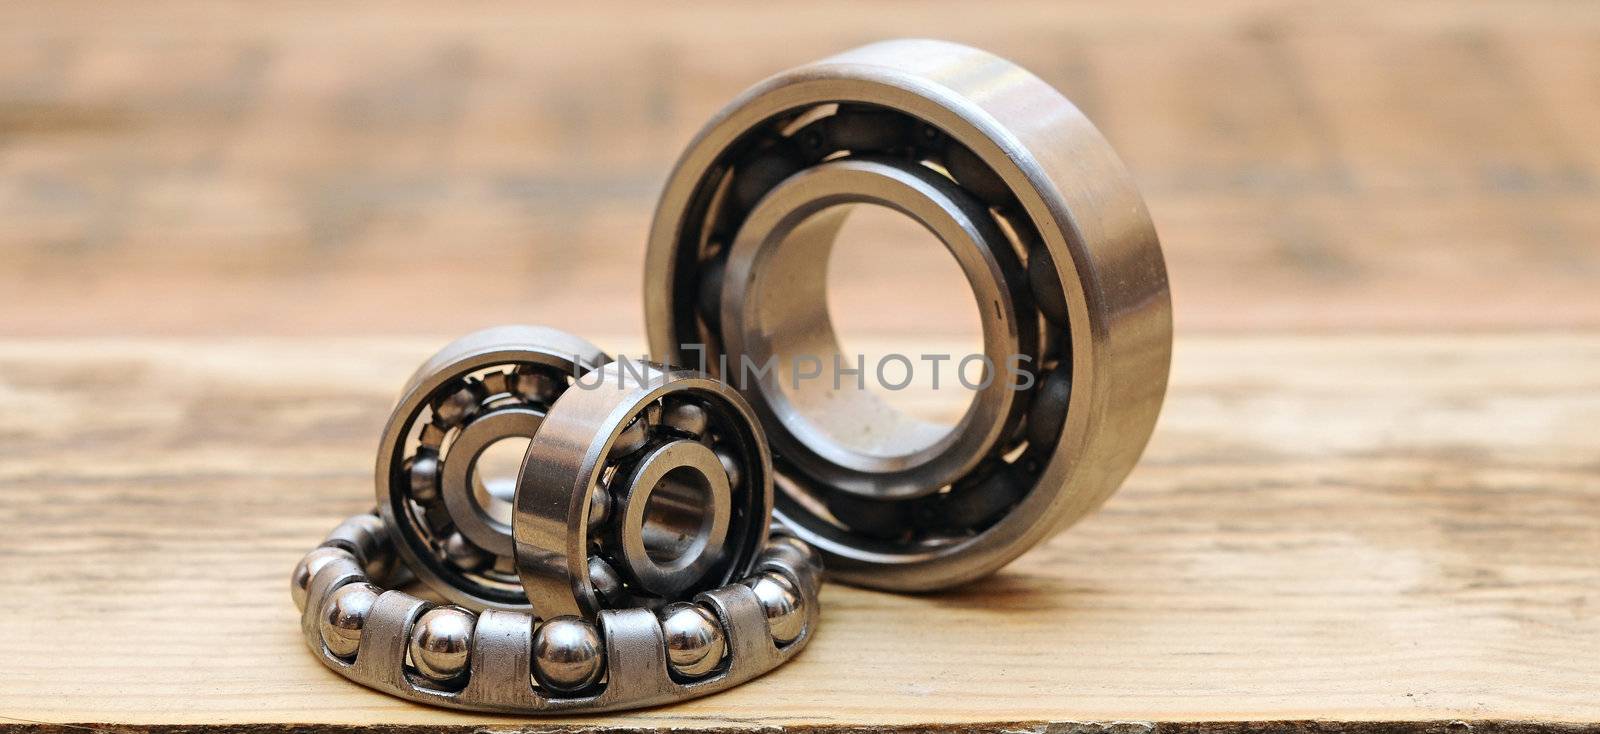 steel ball bearings on wooden table